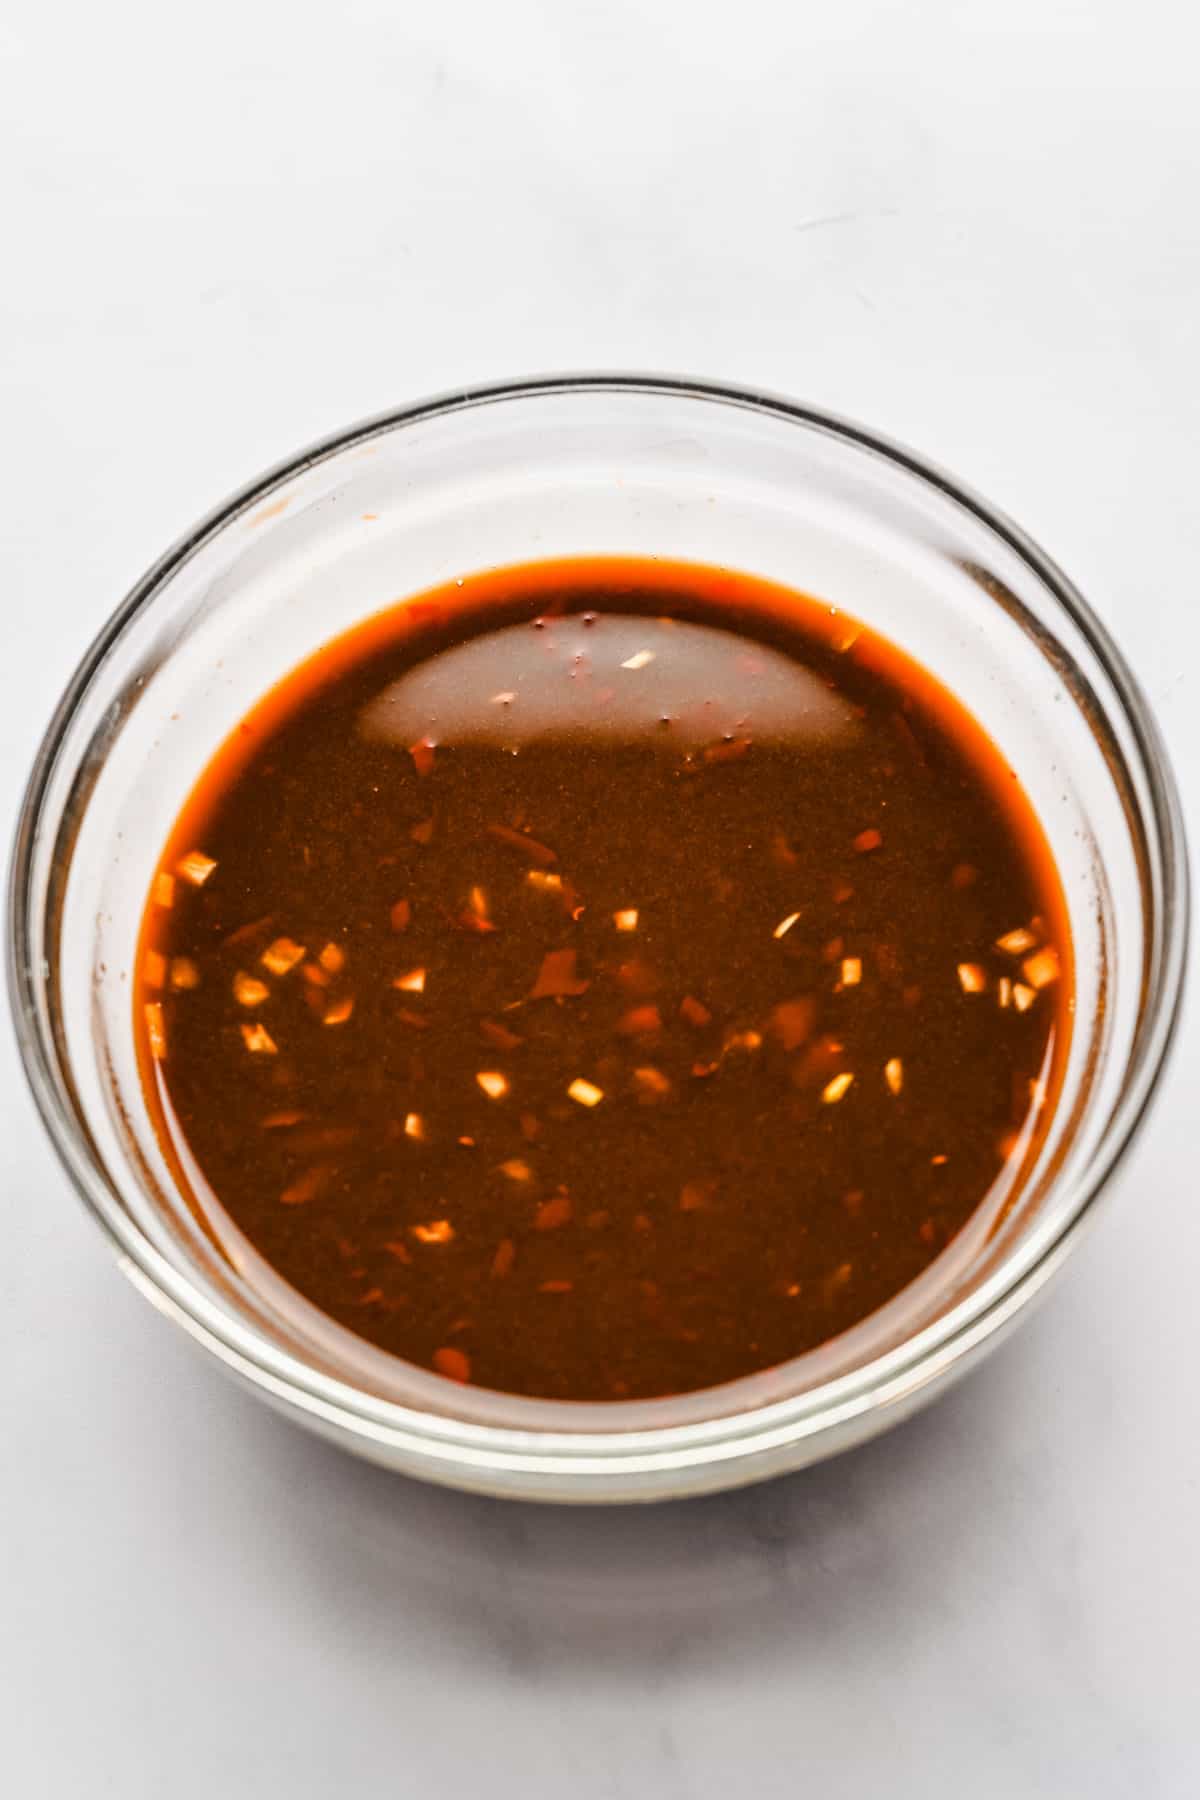 Sesame garlic sauce in a glass bowl.